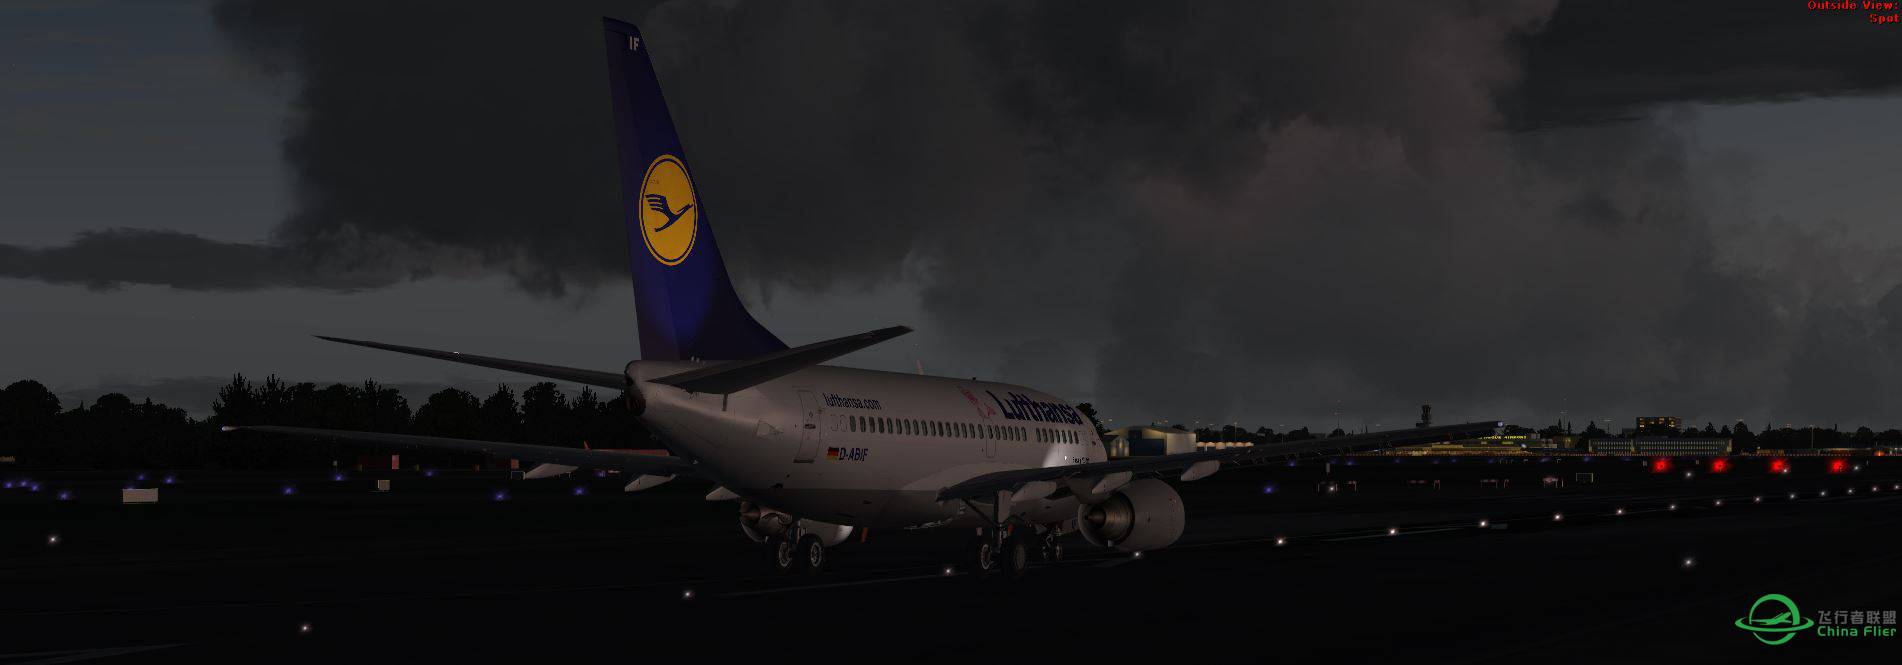 B737 Lufthansa-4608 